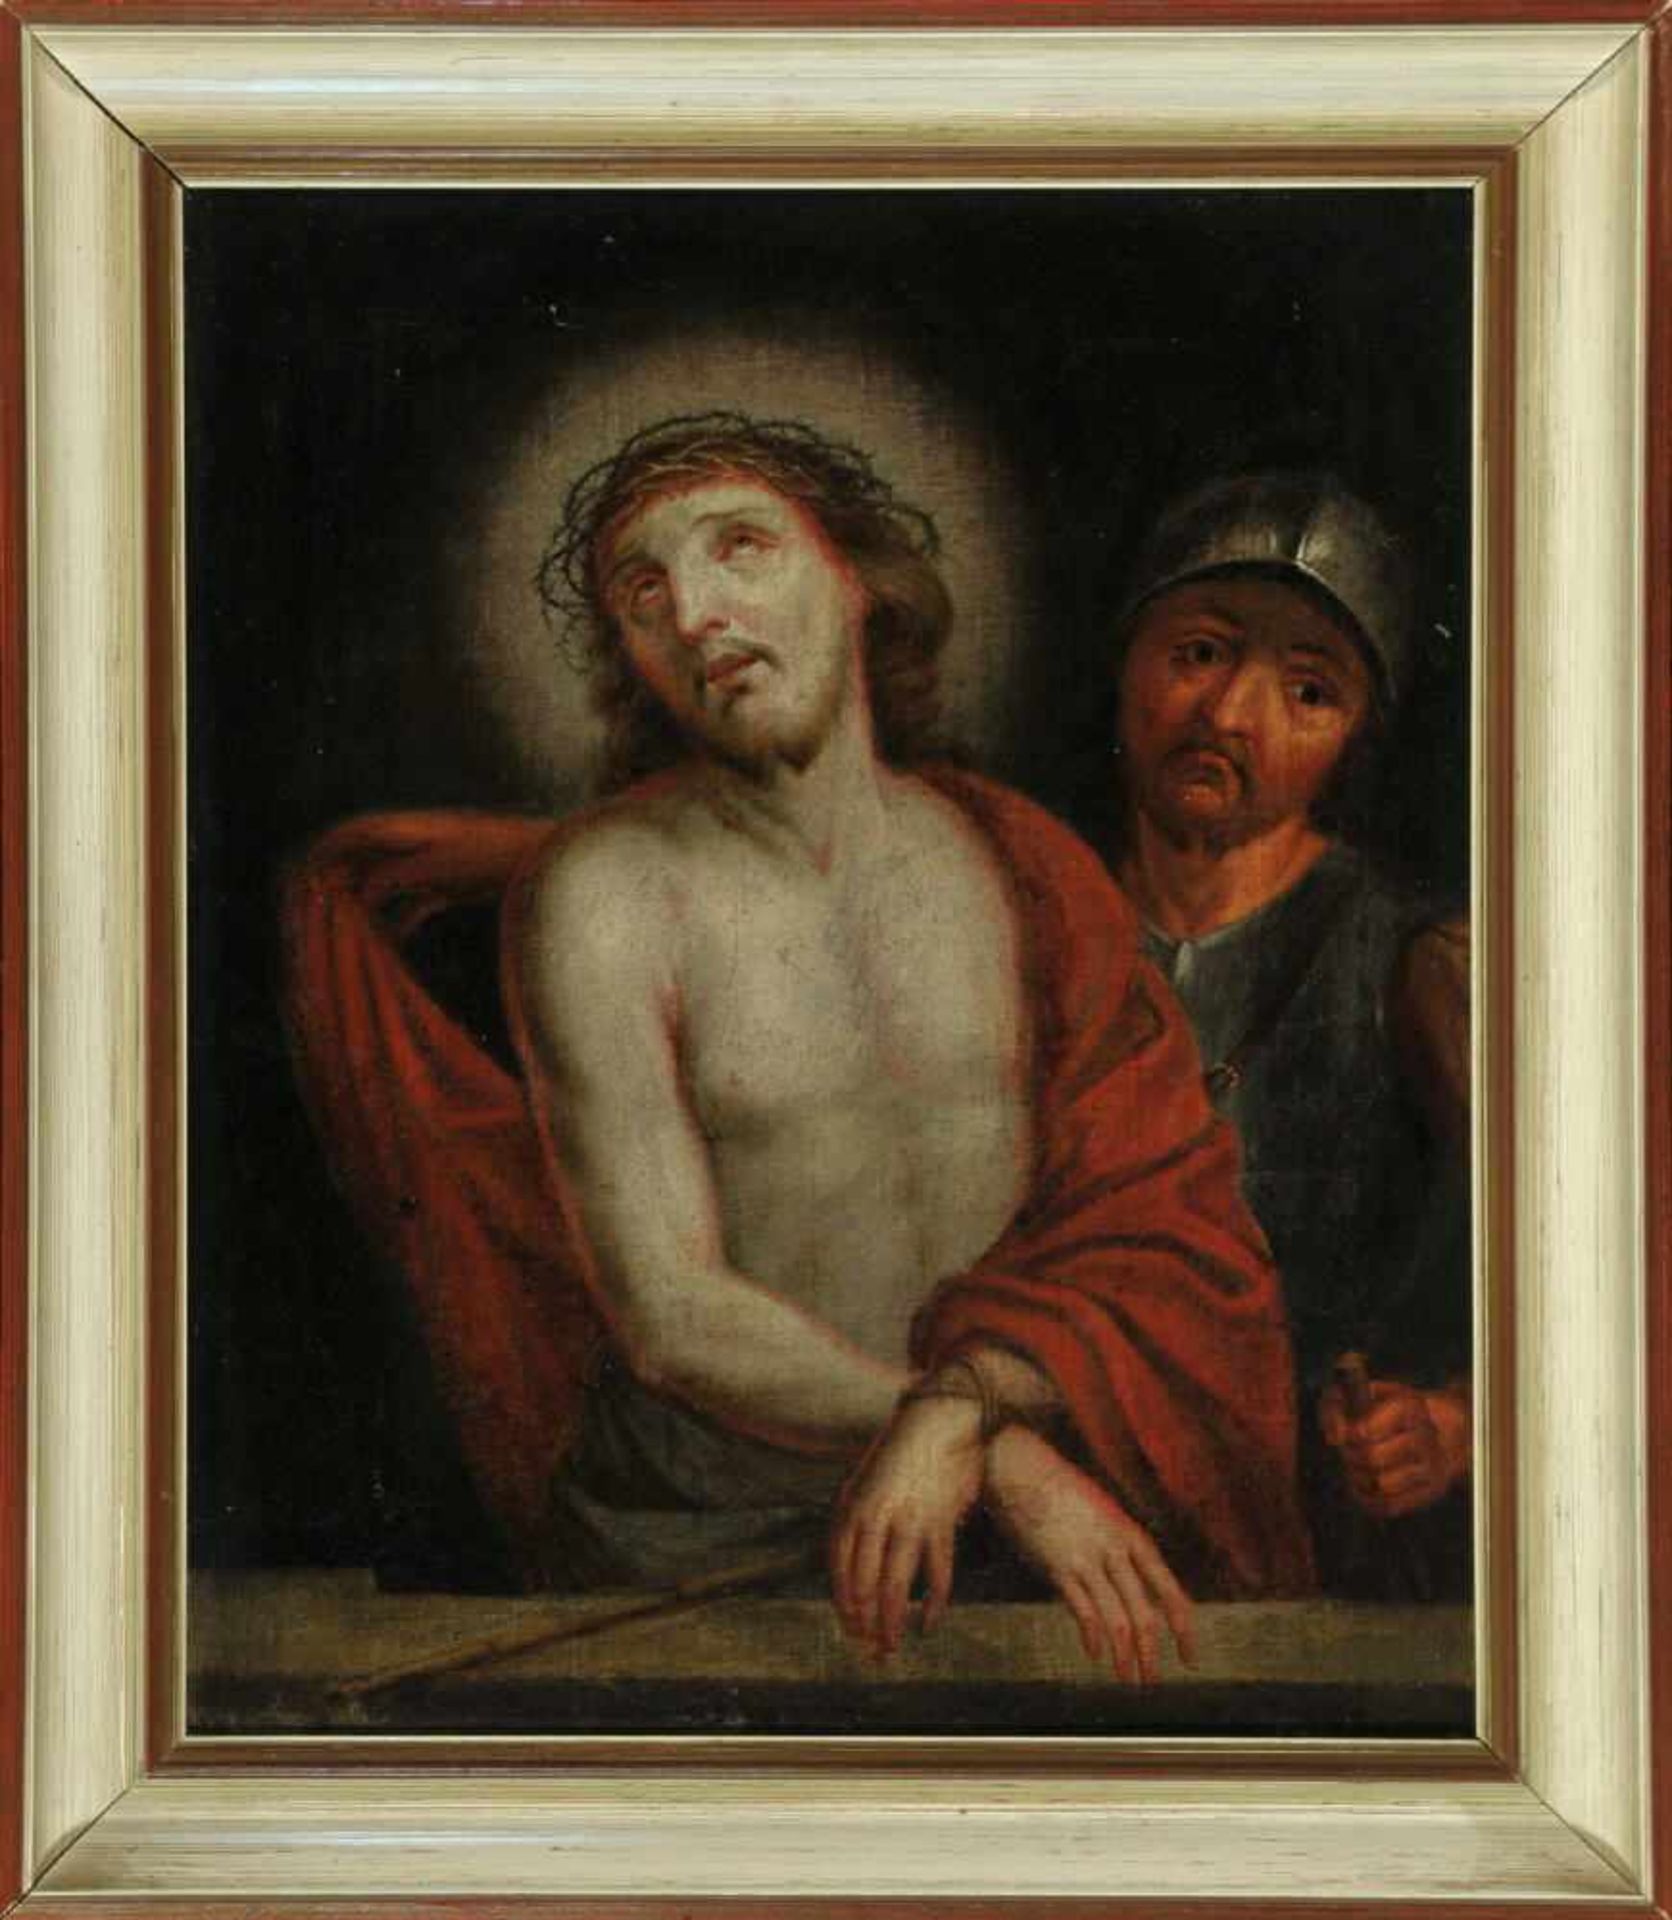 Bildnismaler des 17. Jh.Öl/Lwd, doubl., 46 x 37,5 cm, " Ecce homo "